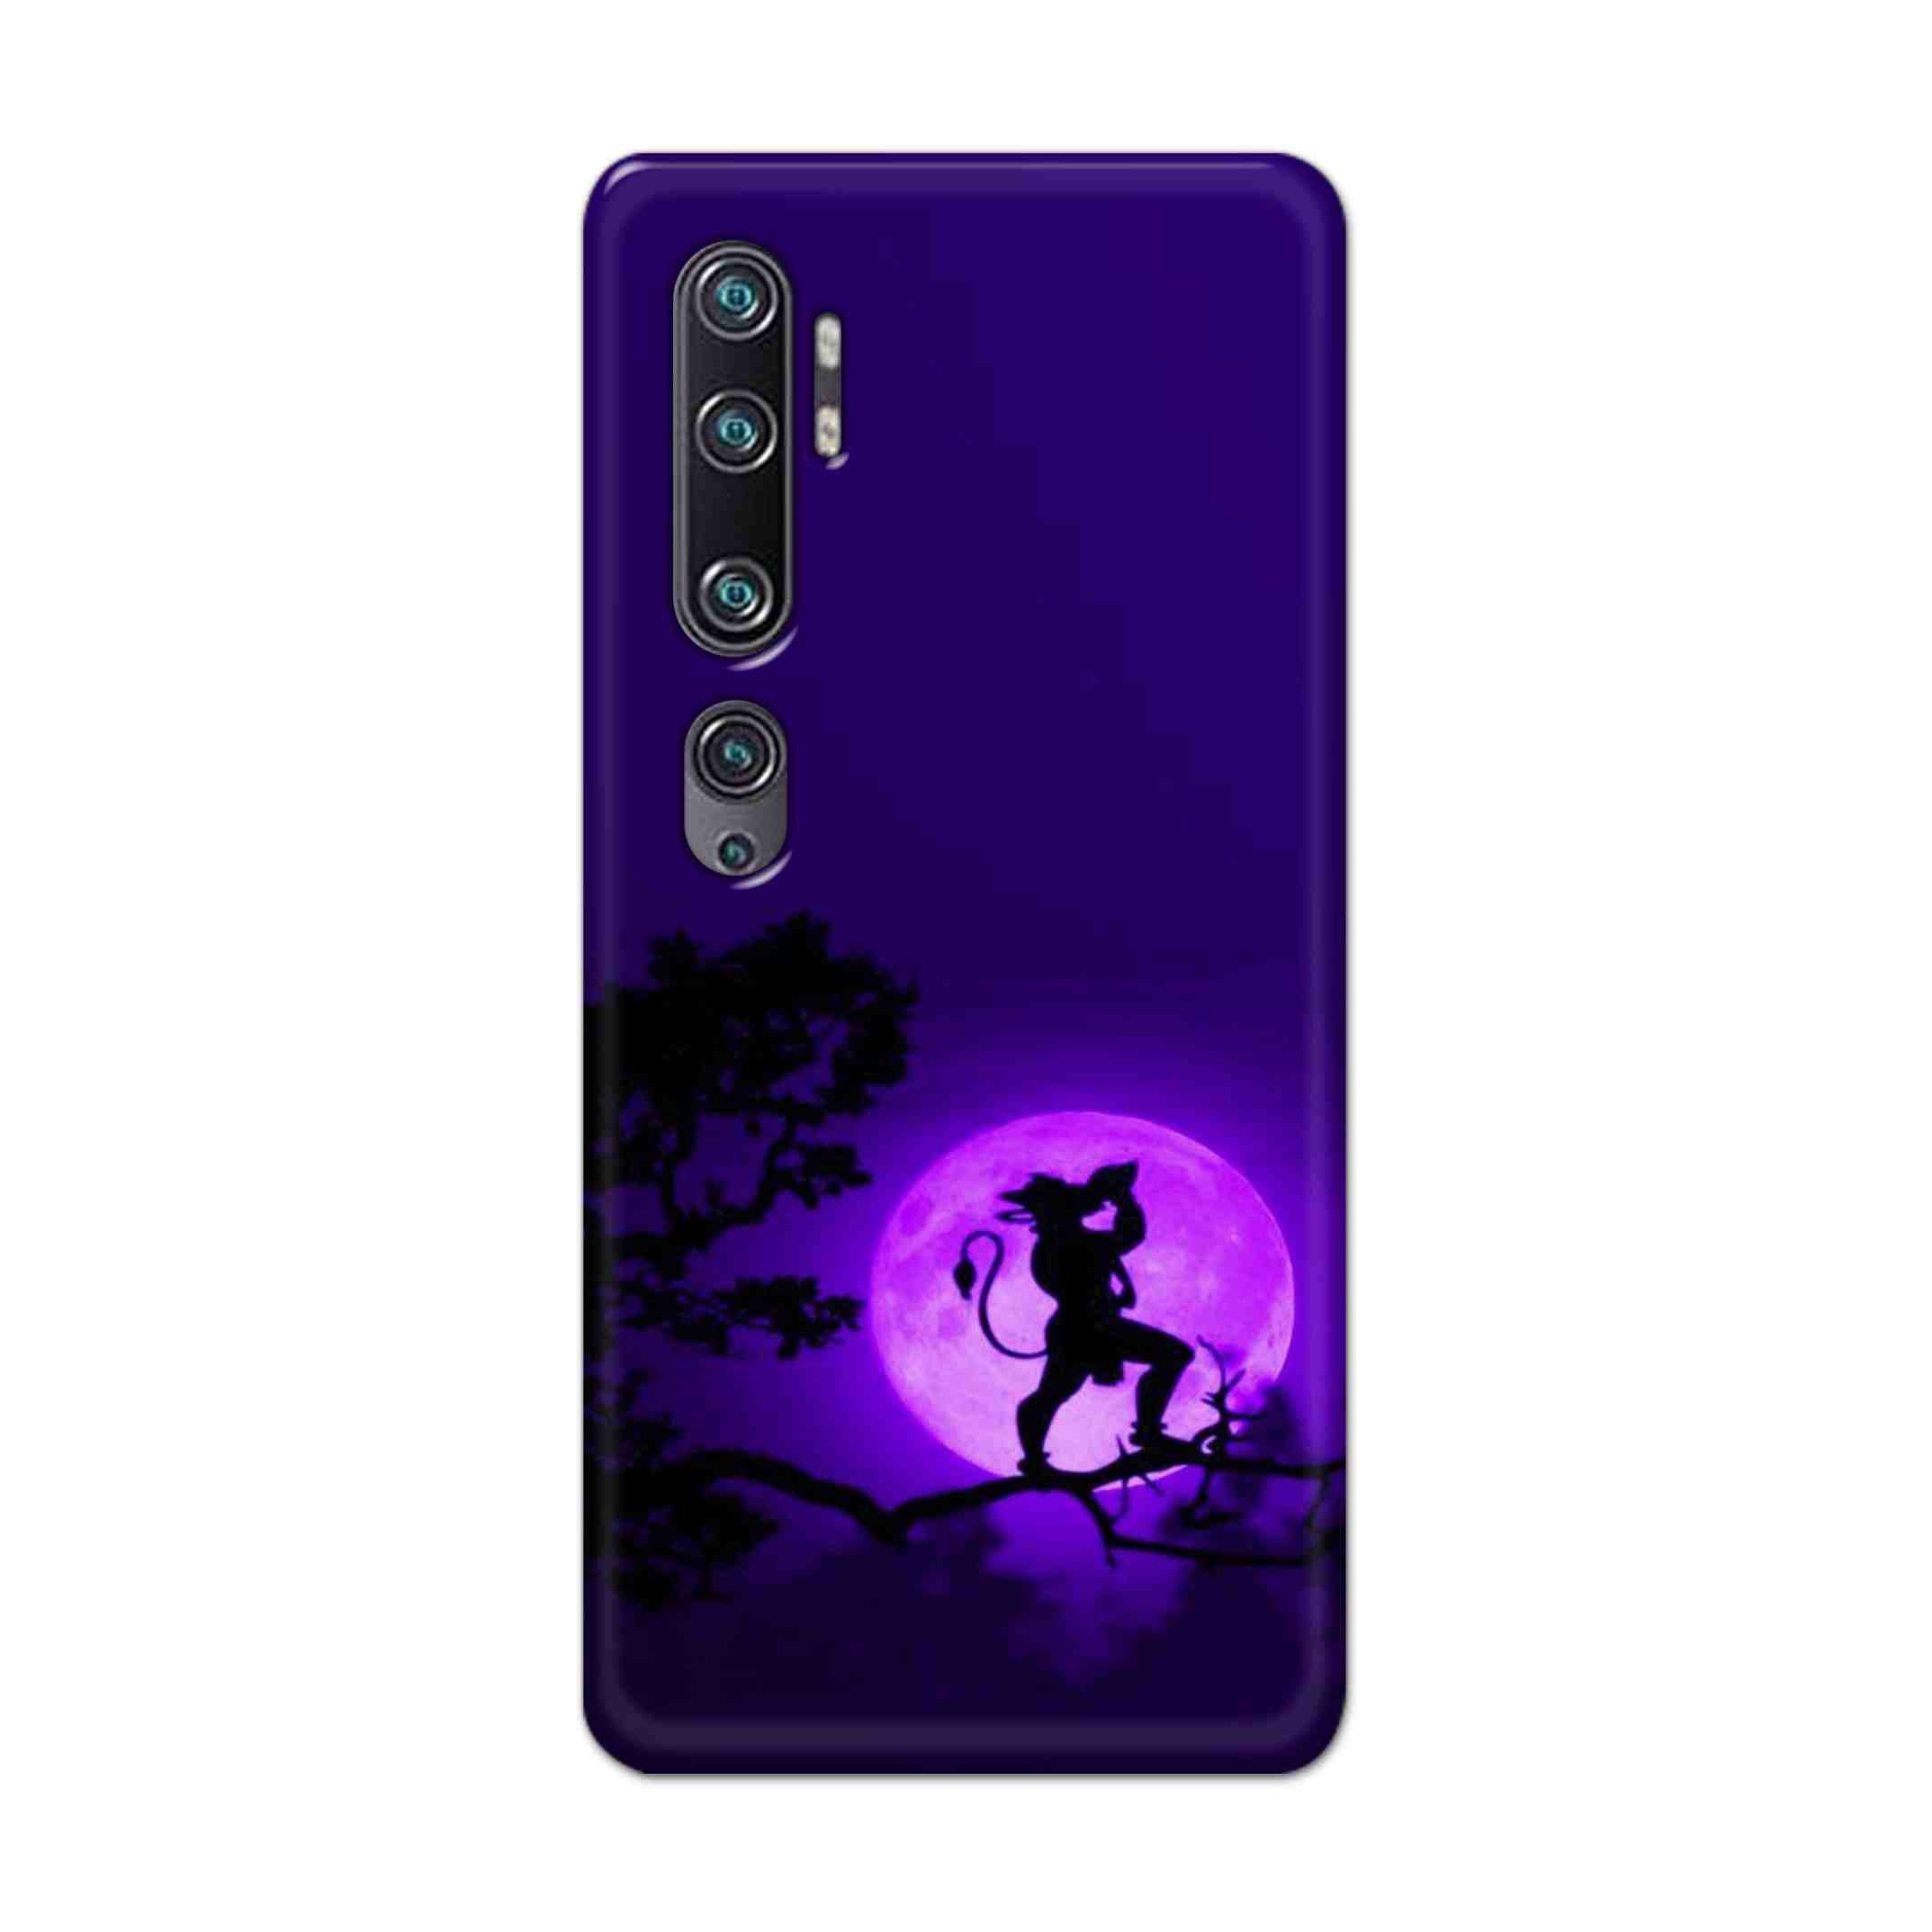 Buy Hanuman Hard Back Mobile Phone Case Cover For Xiaomi Mi Note 10 Pro Online